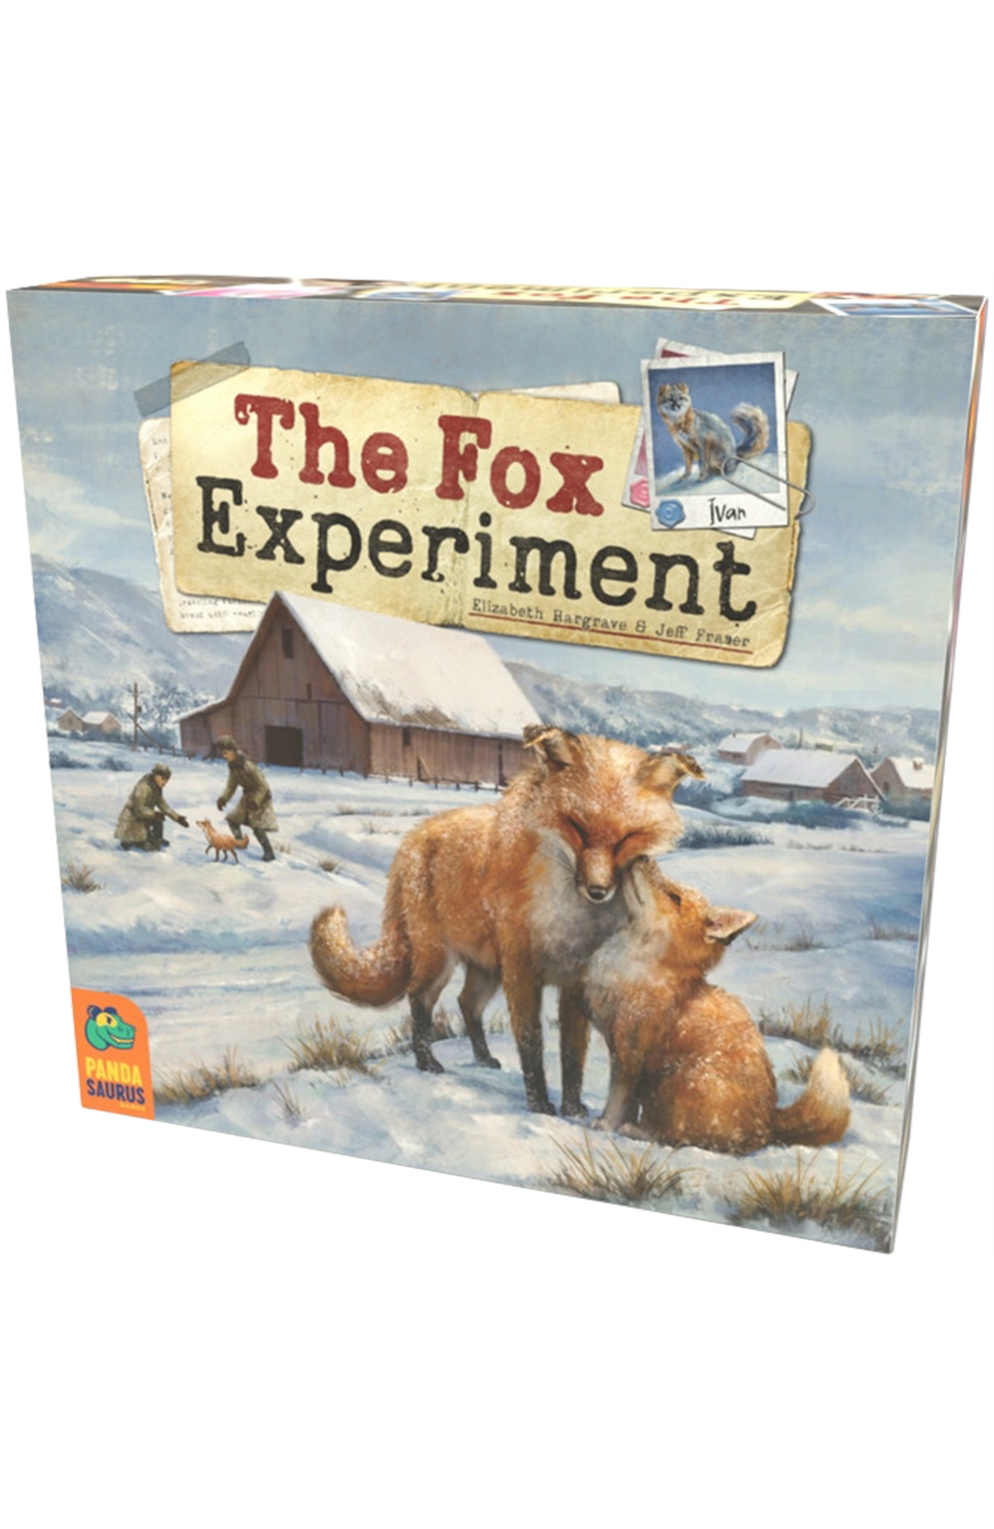 The Fox Experiment